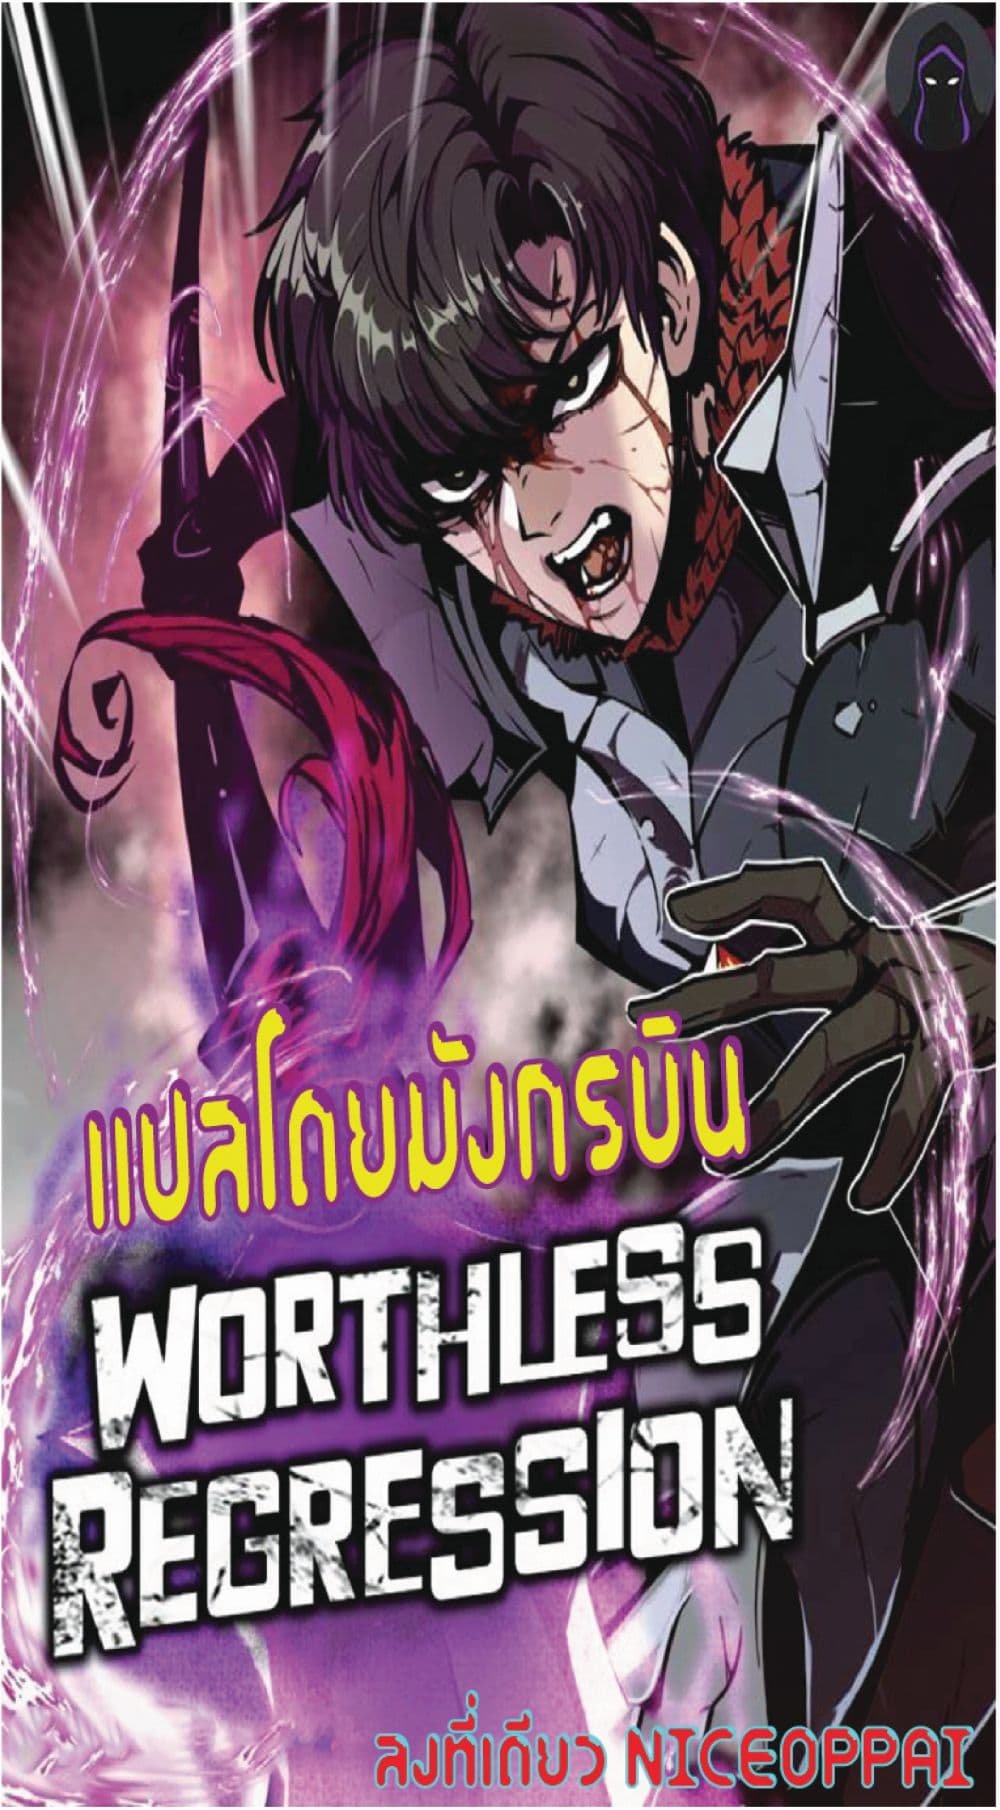 Worthless Regression 15 01